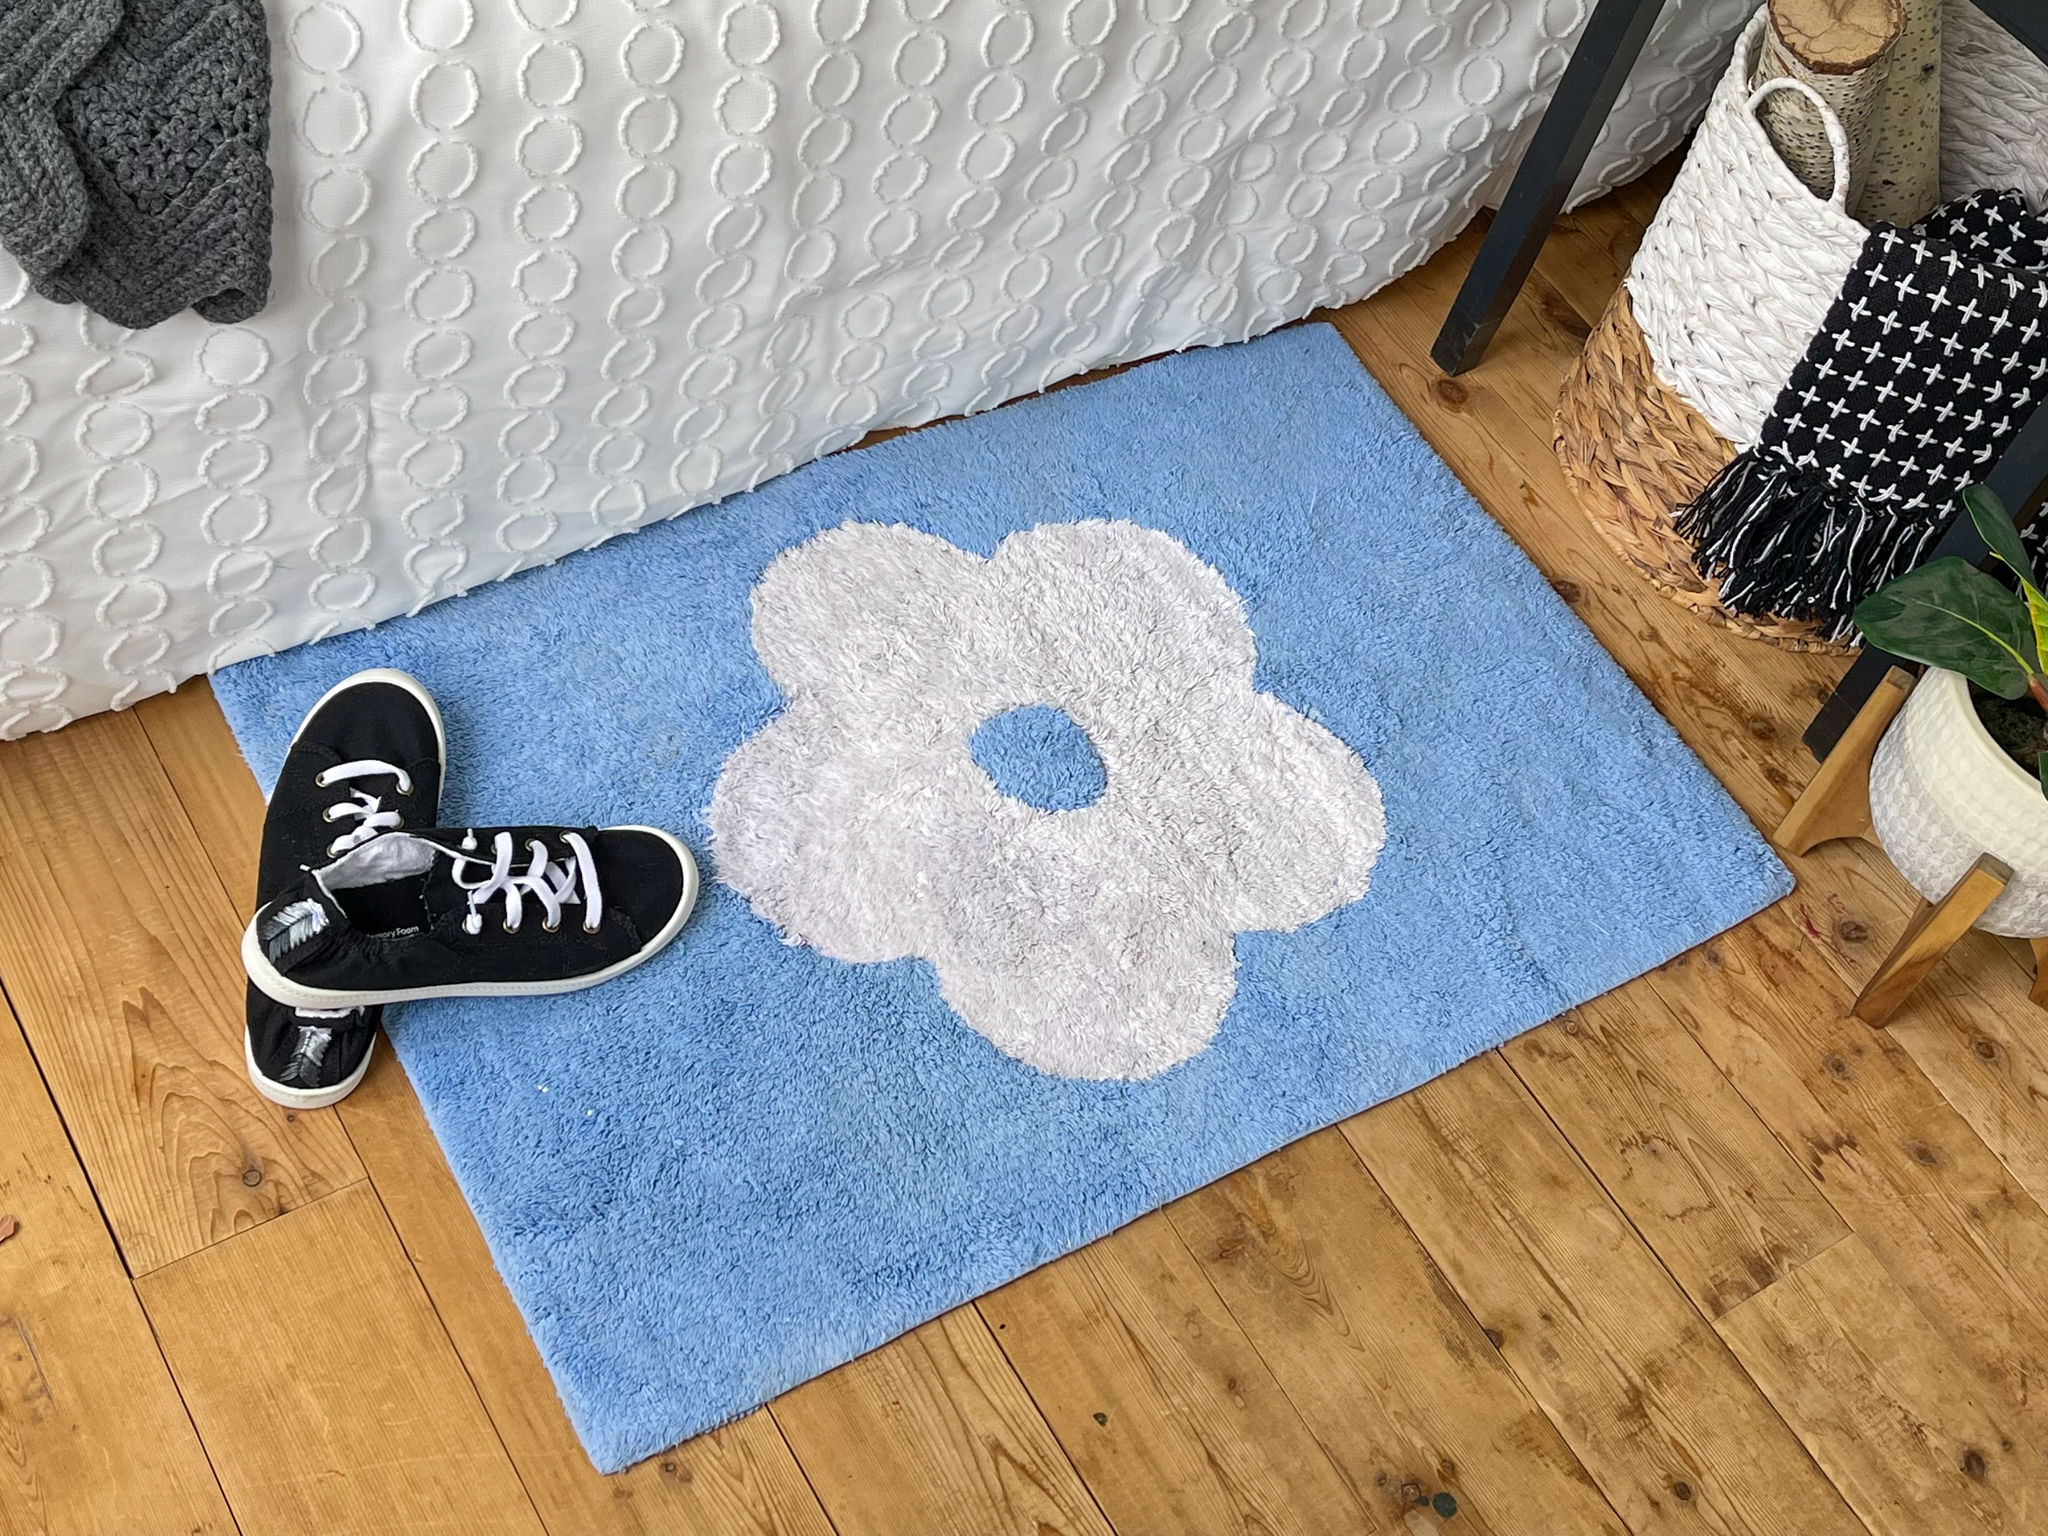 Carpet sample area rug used Gorilla tape to secure them.